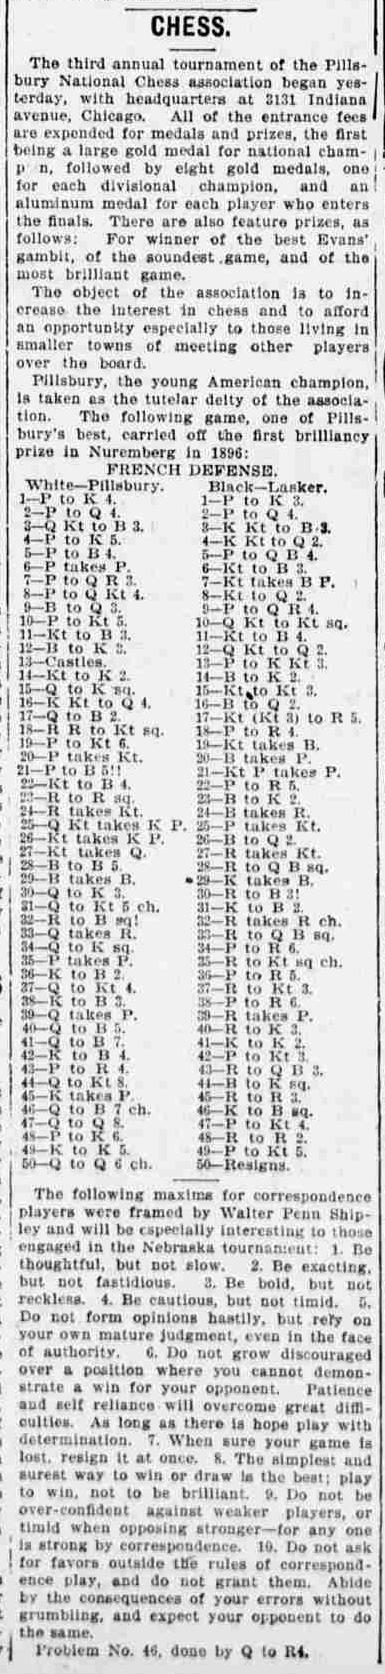 1898.10.16-01 Omaha Daily Bee.jpg